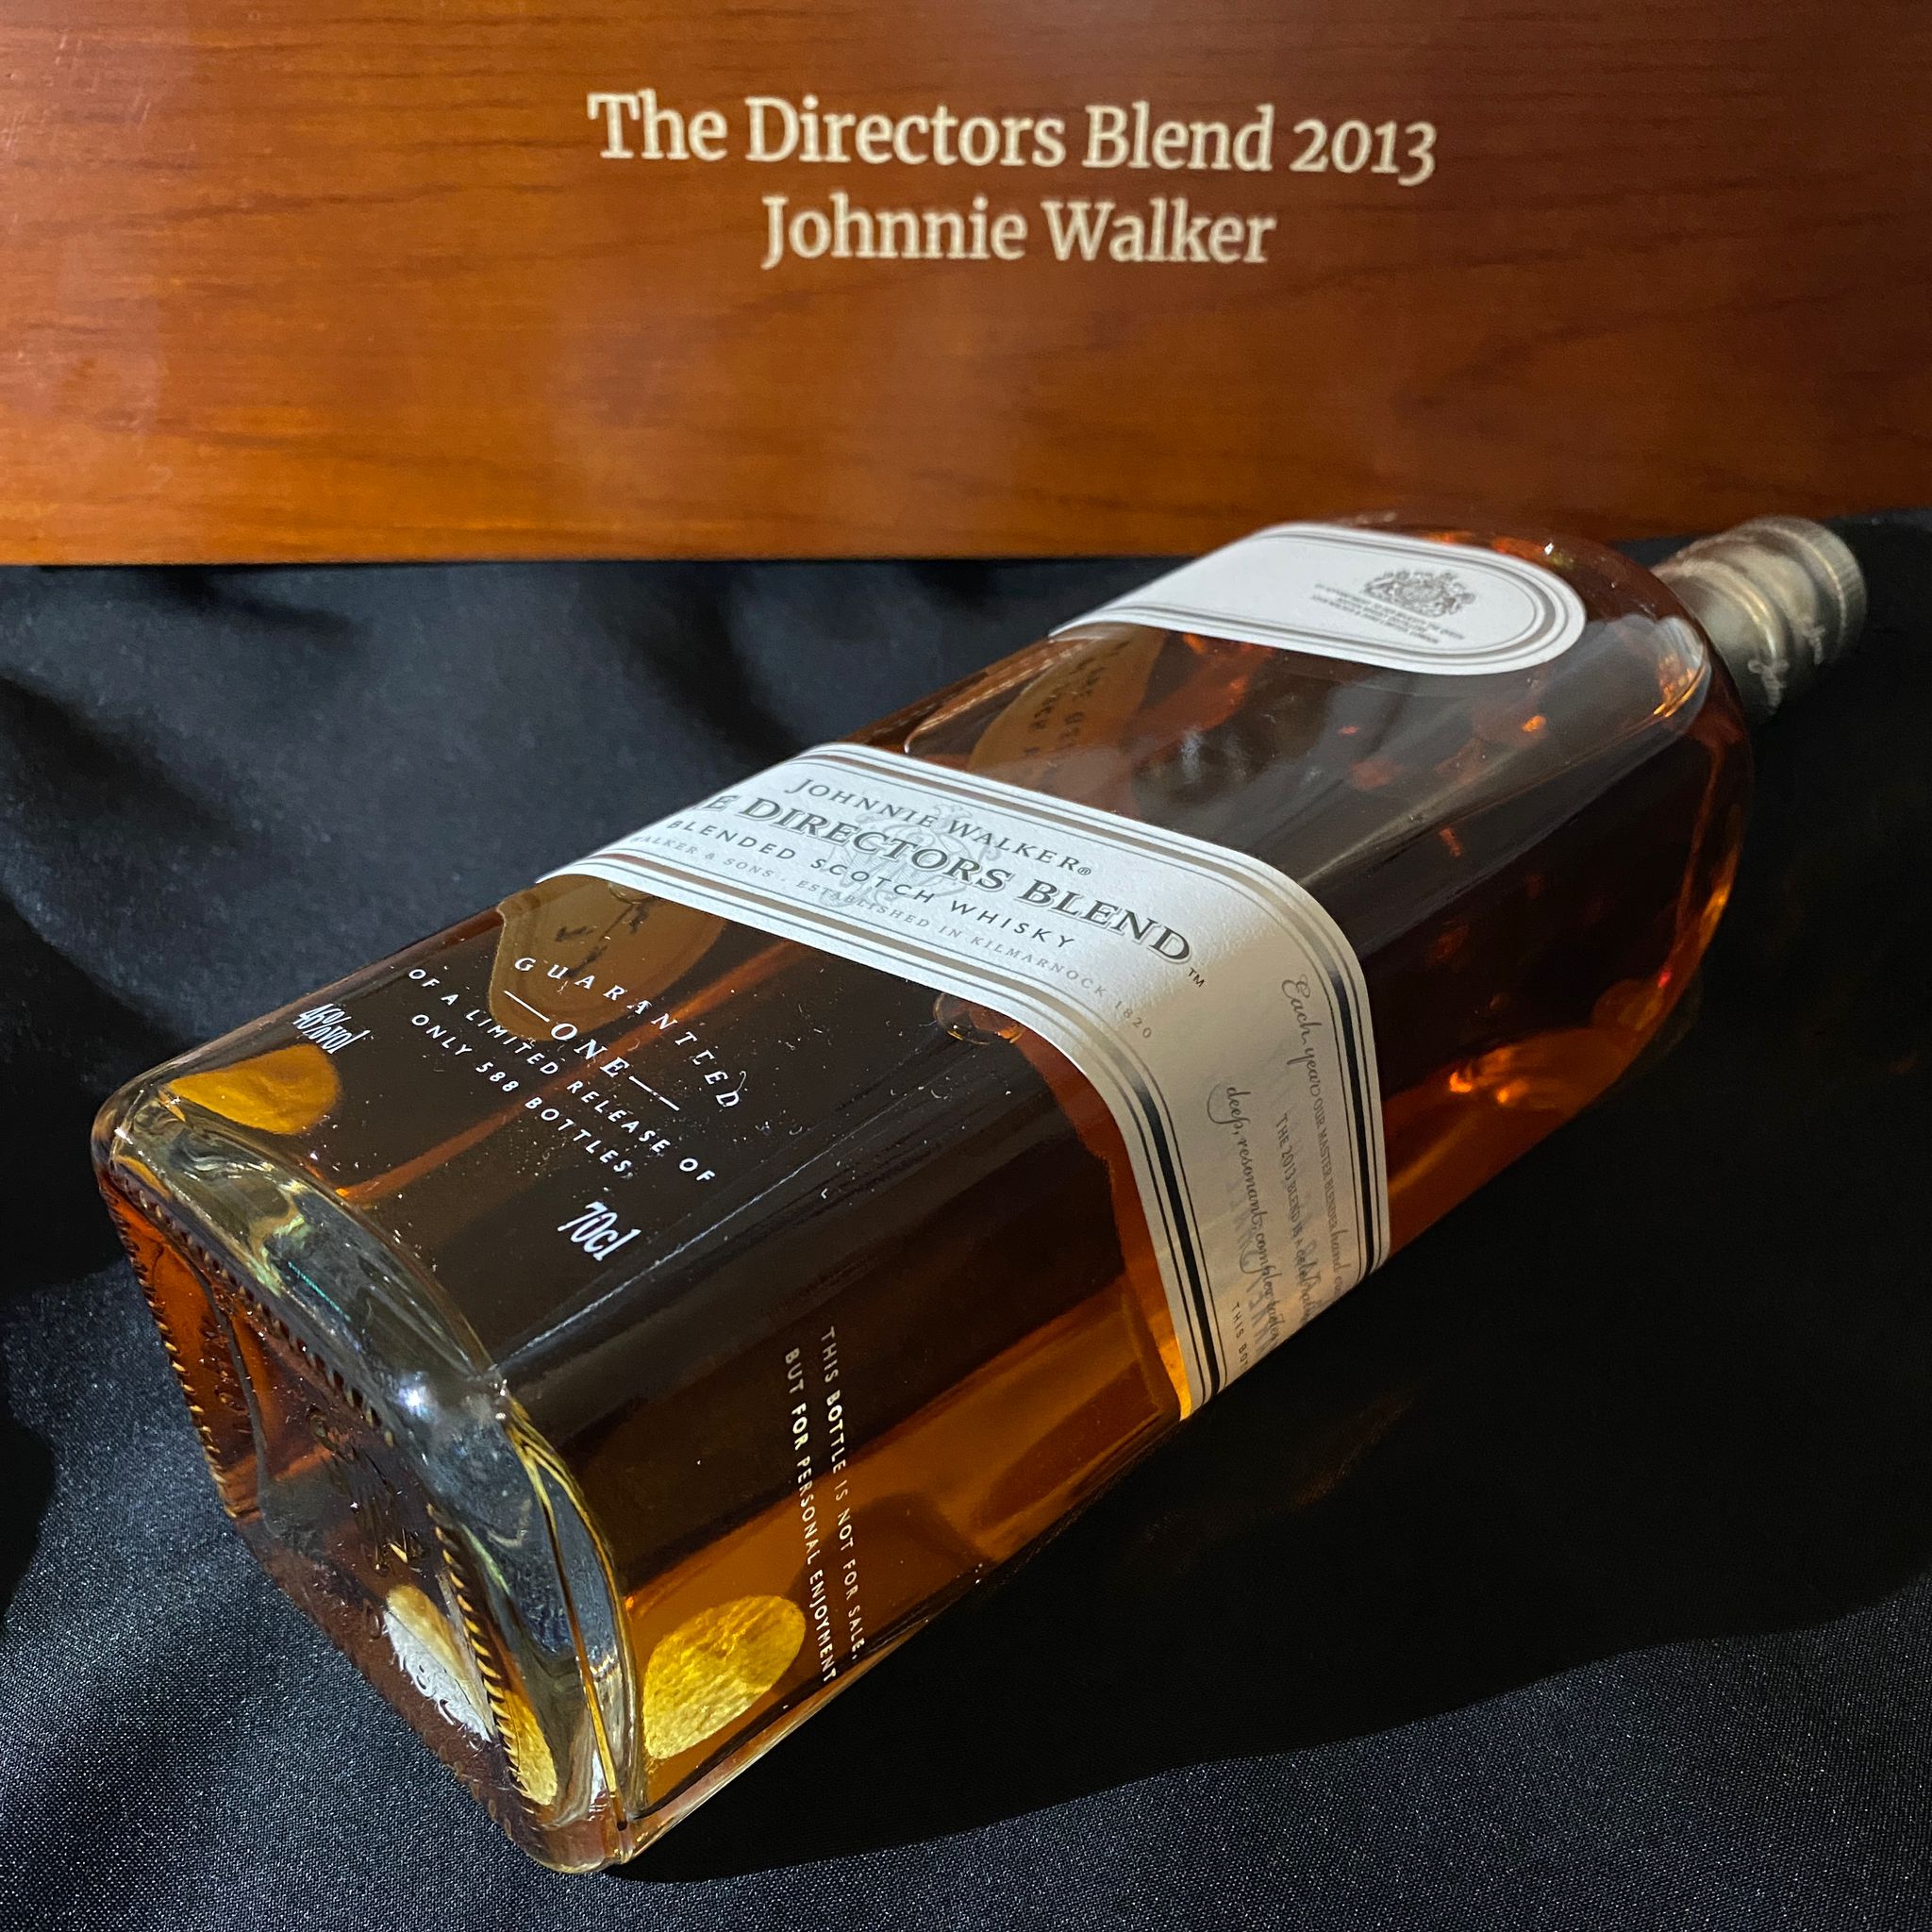 Johnnie Walker The Directors Blend 2013